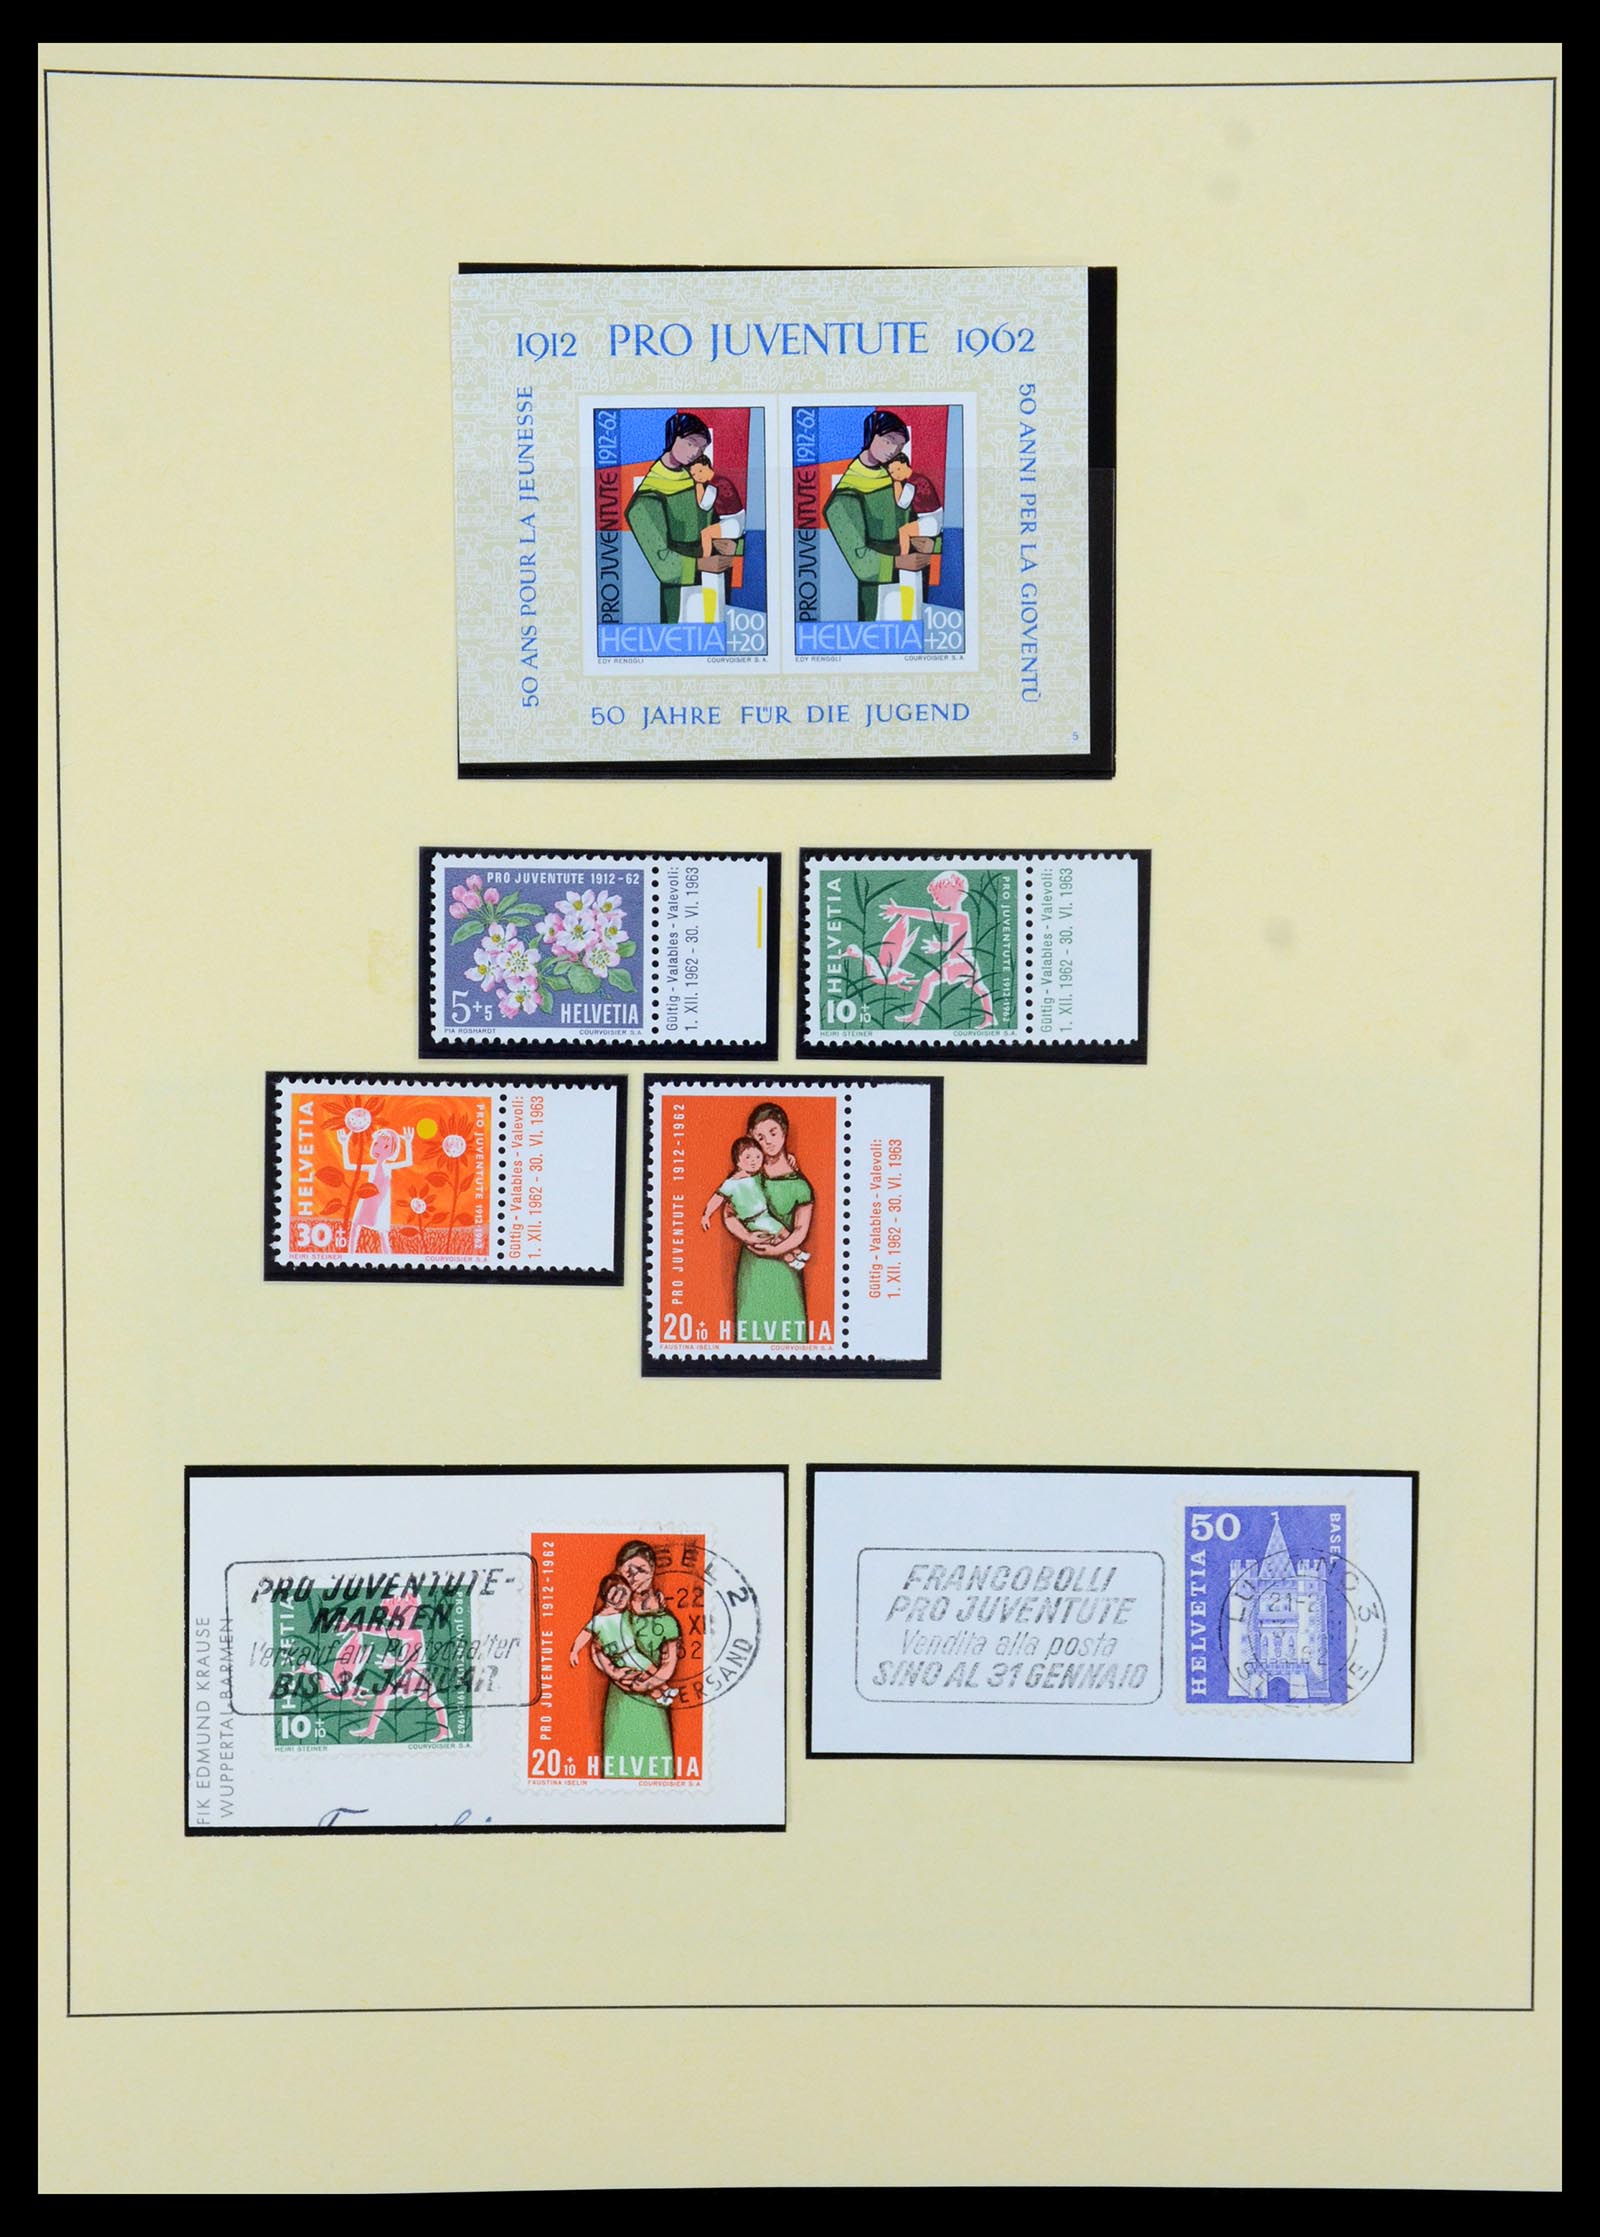 35668 019 - Stamp Collection 35668 Switzerland Pro Juventute and Pro Patria 1910-197